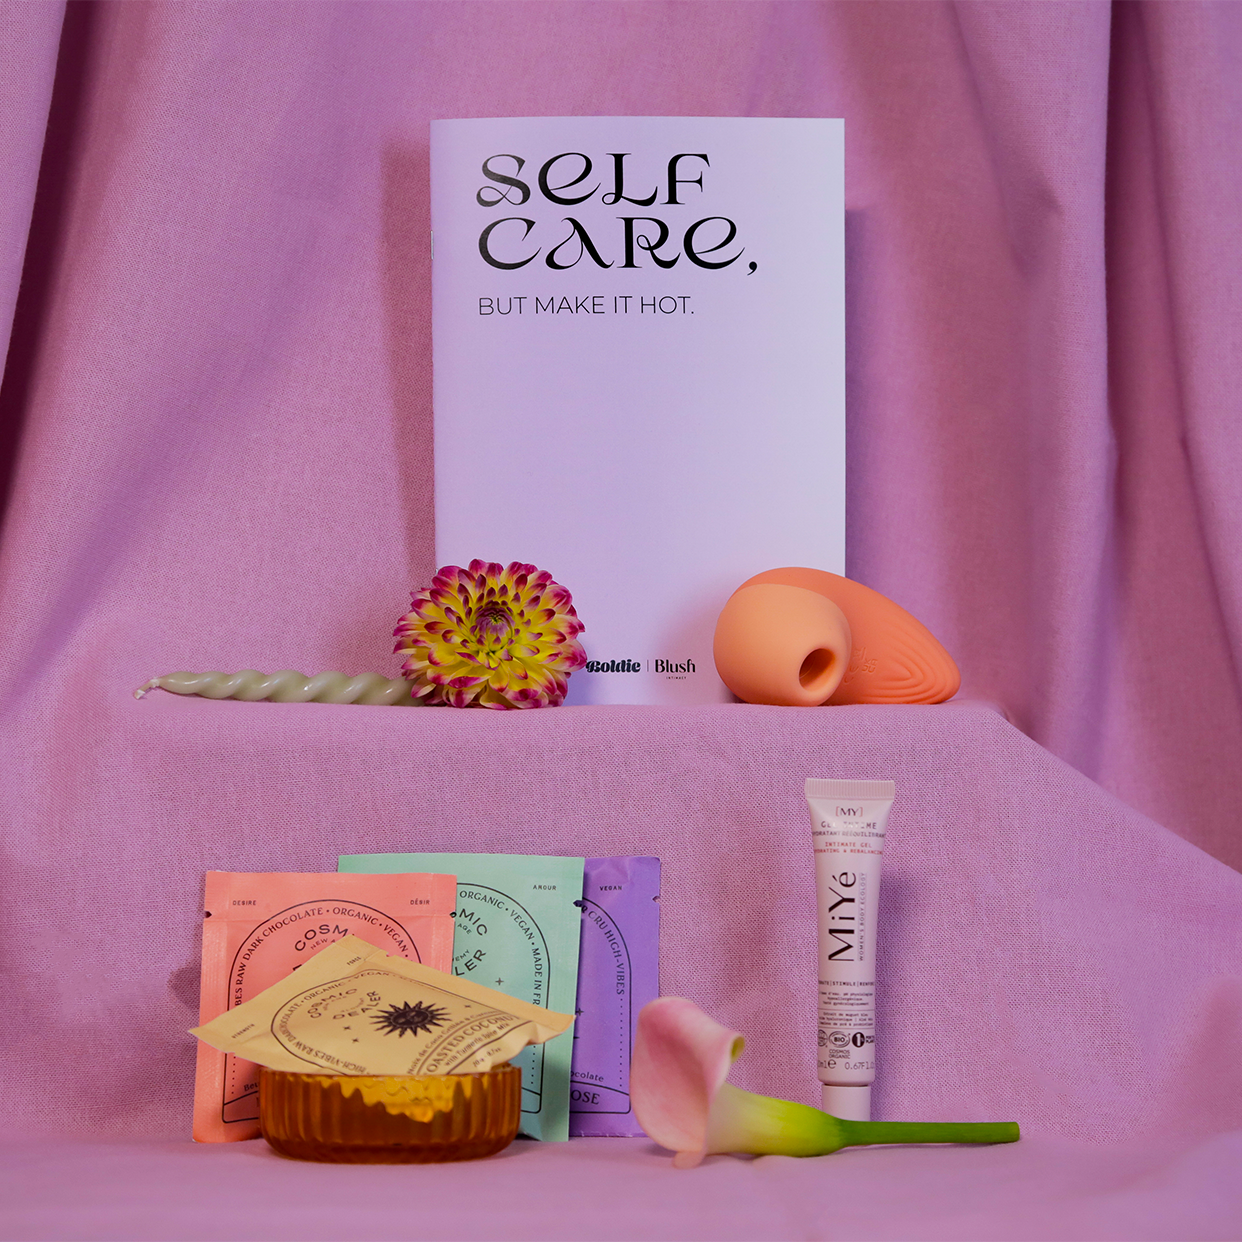 Self-Care Box, but make it Hot